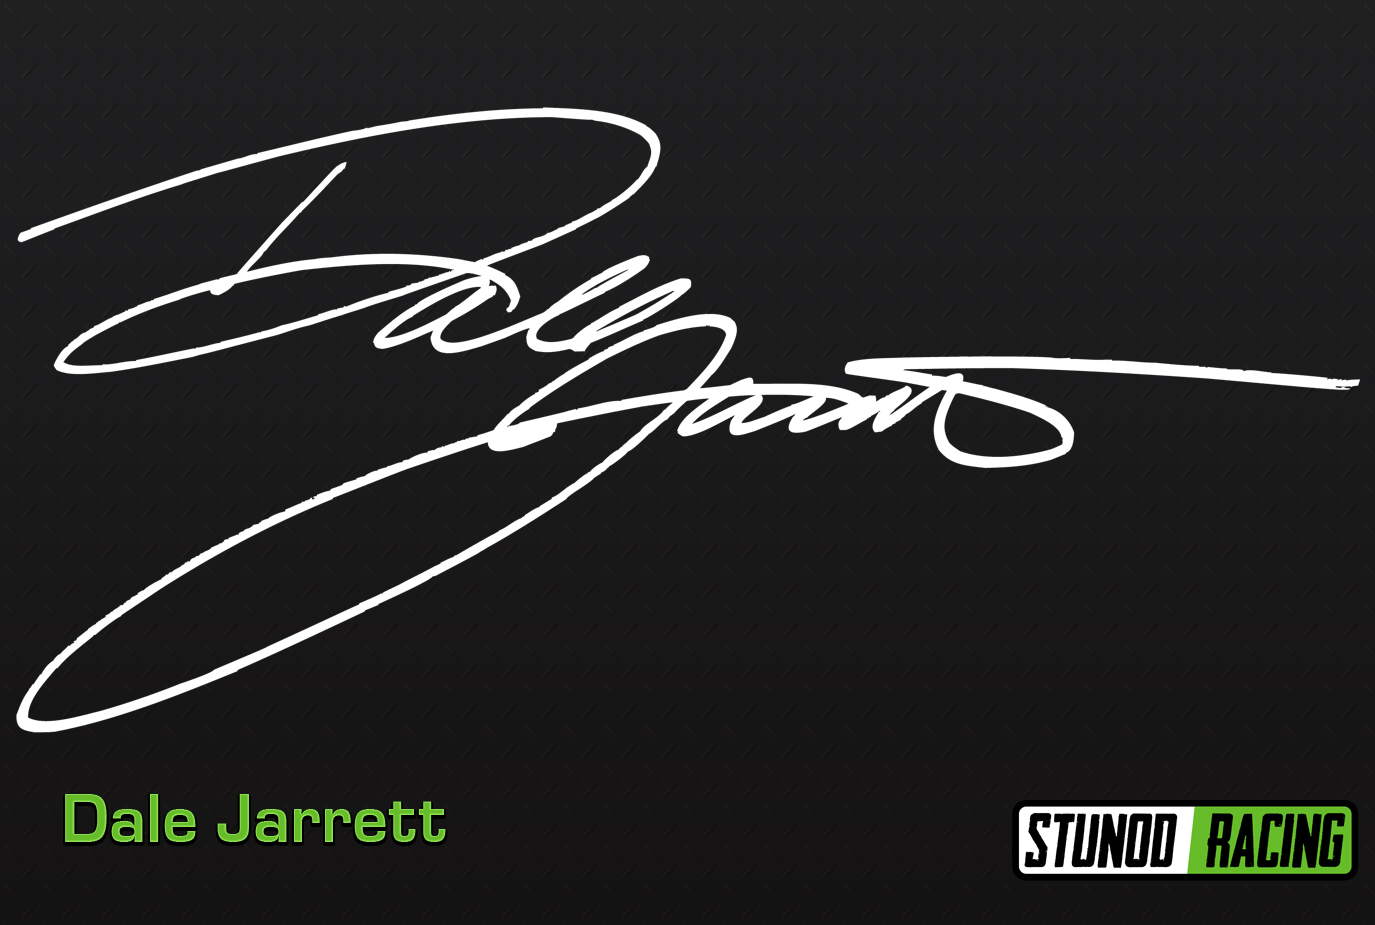 StunodRacing-Dale_Jarrett-Signature.jpg